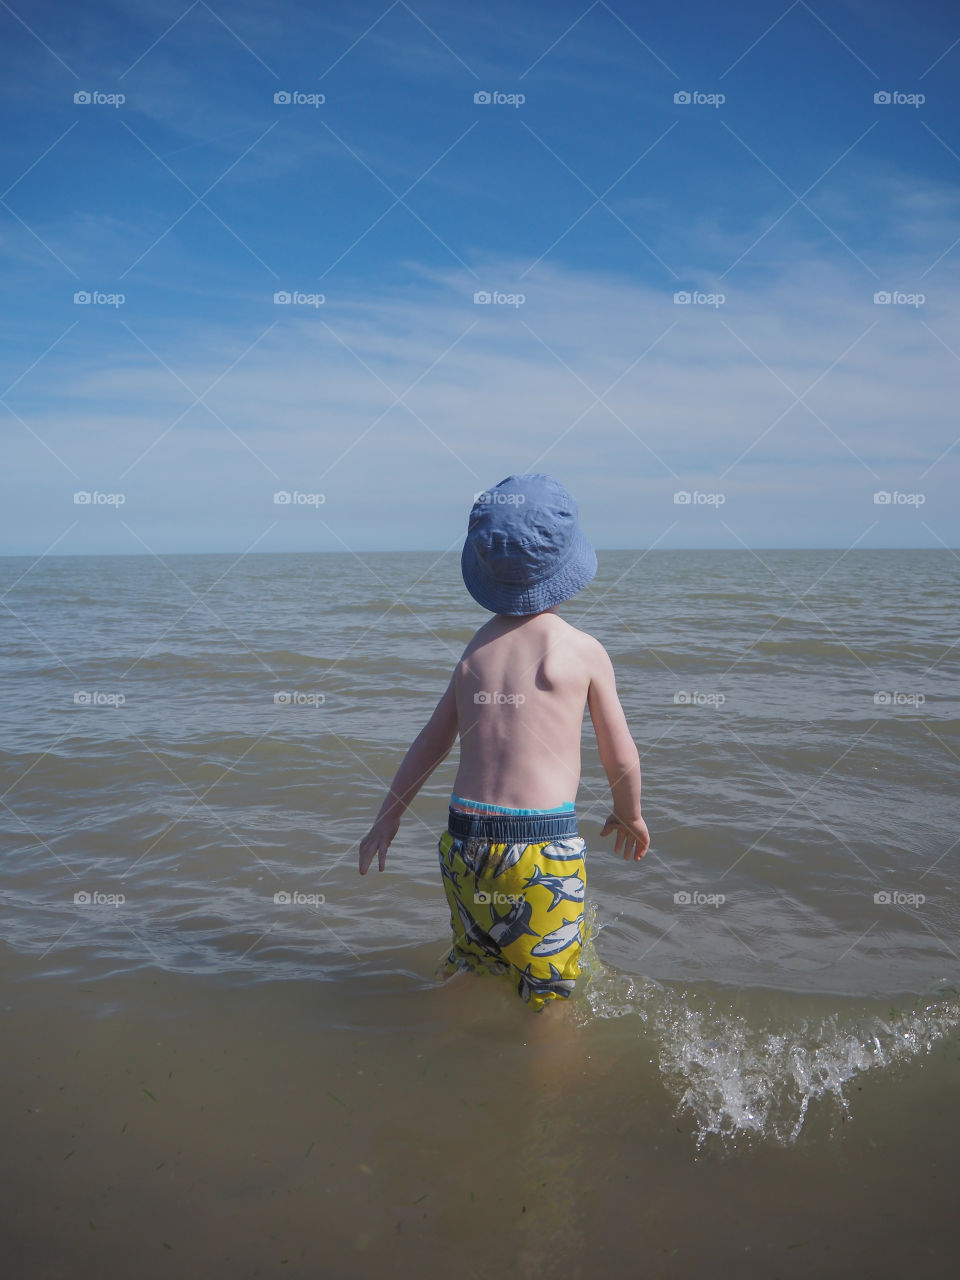 Toddler boy playing in the ocean water.